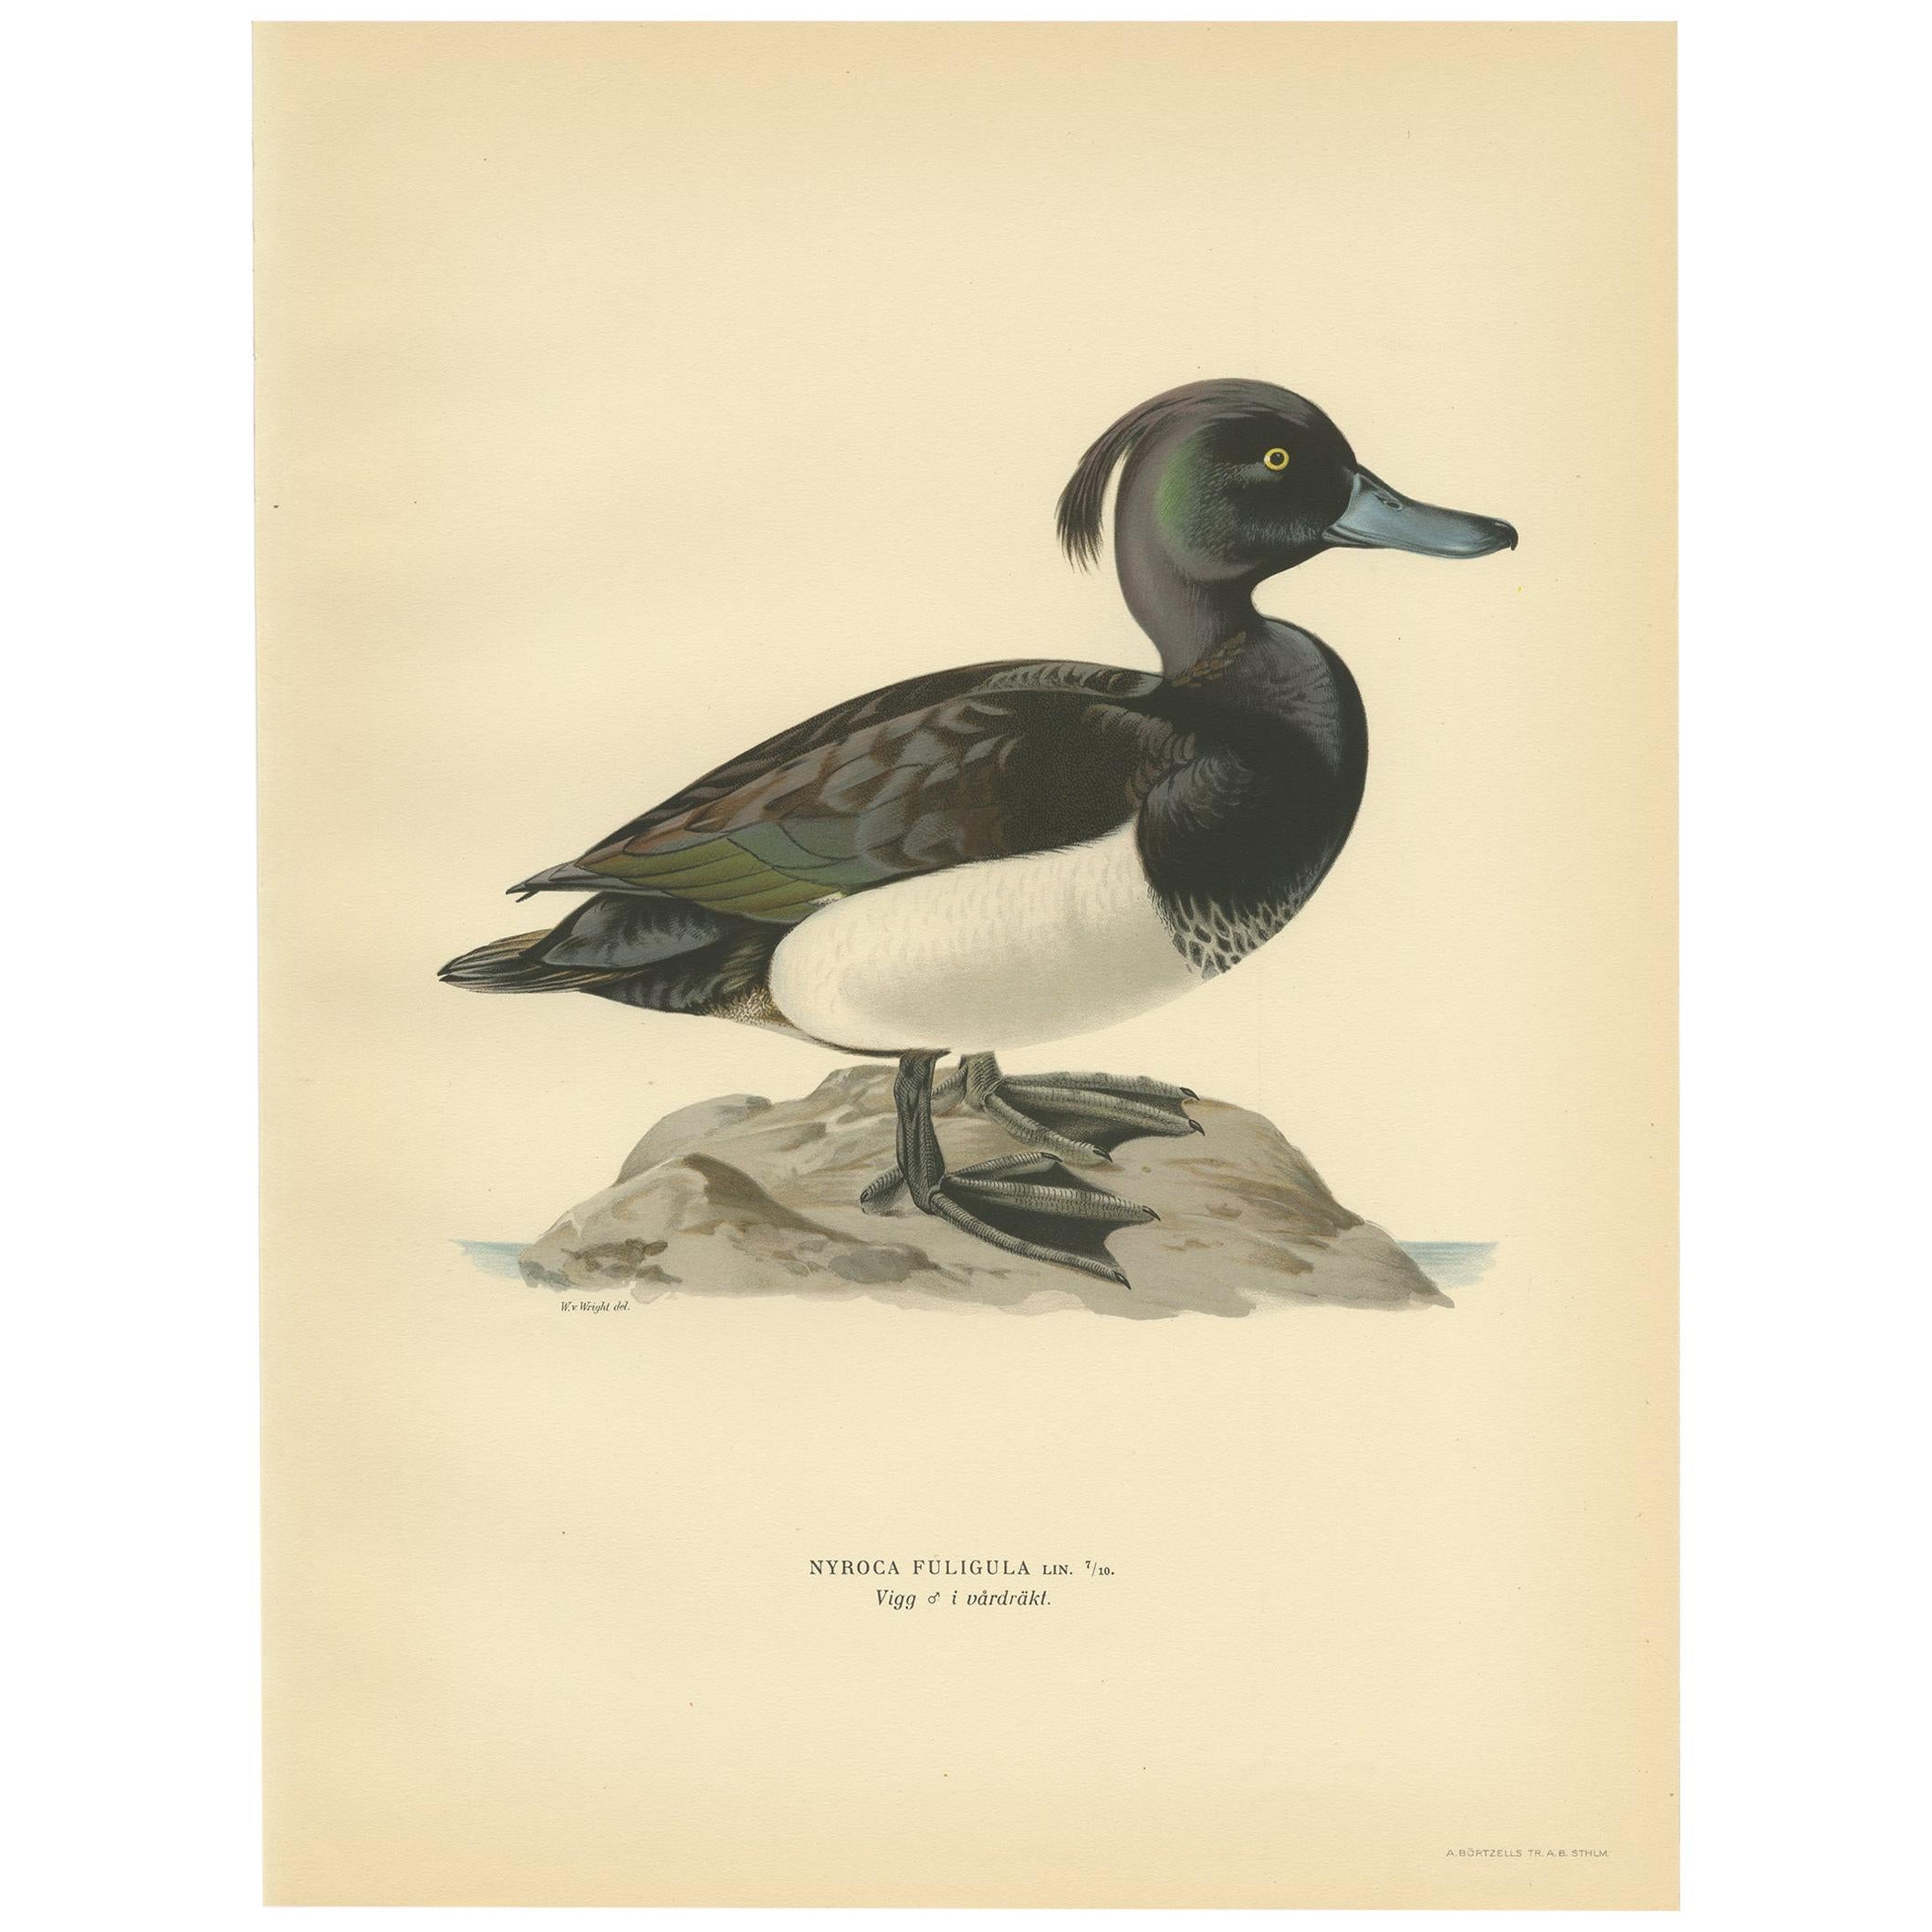 Antique Bird Print of the Tufted Duck by Von Wright, 1929